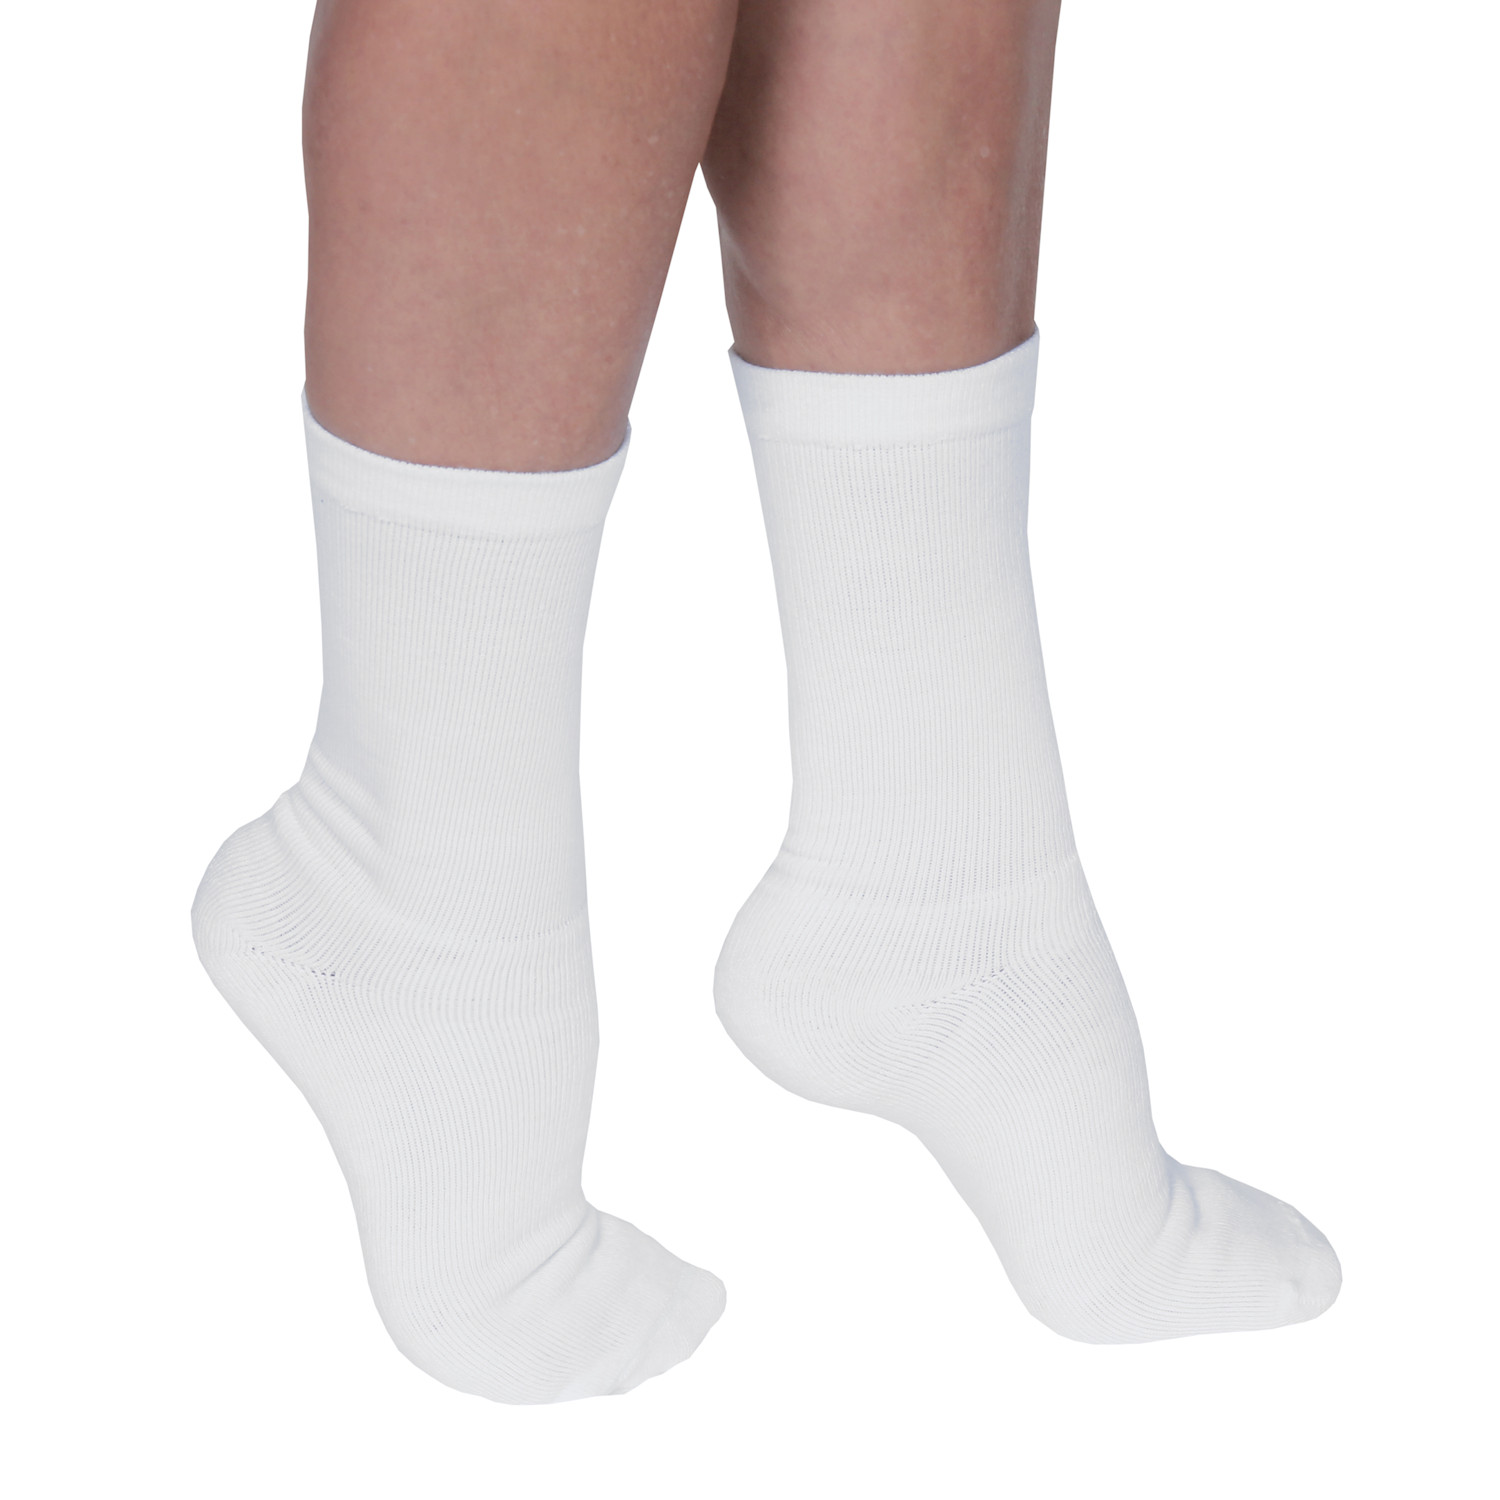 Support Plus Women's Moderate Compression Crew Socks - Coolmax Moistur